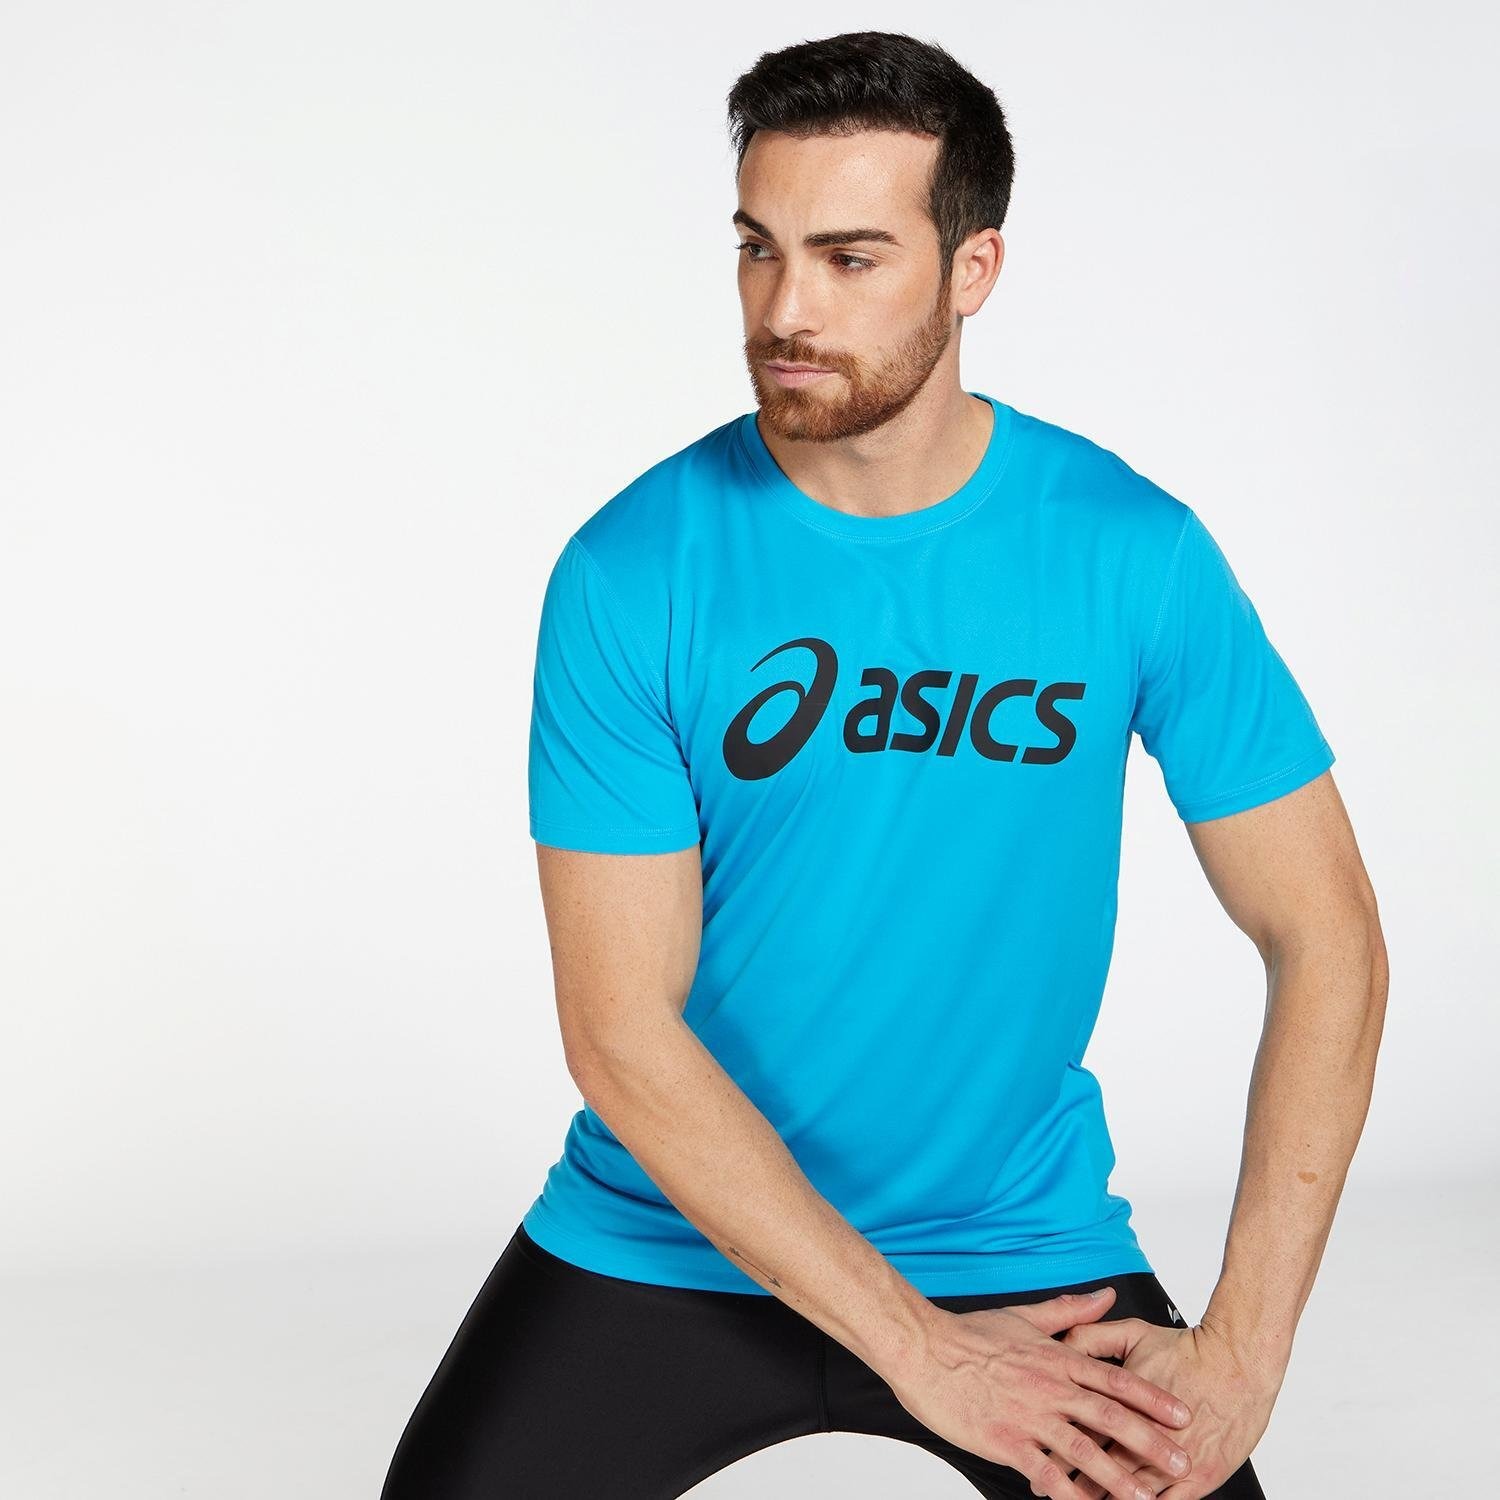 Asics Asics core logo hardloopshirt blauw heren heren